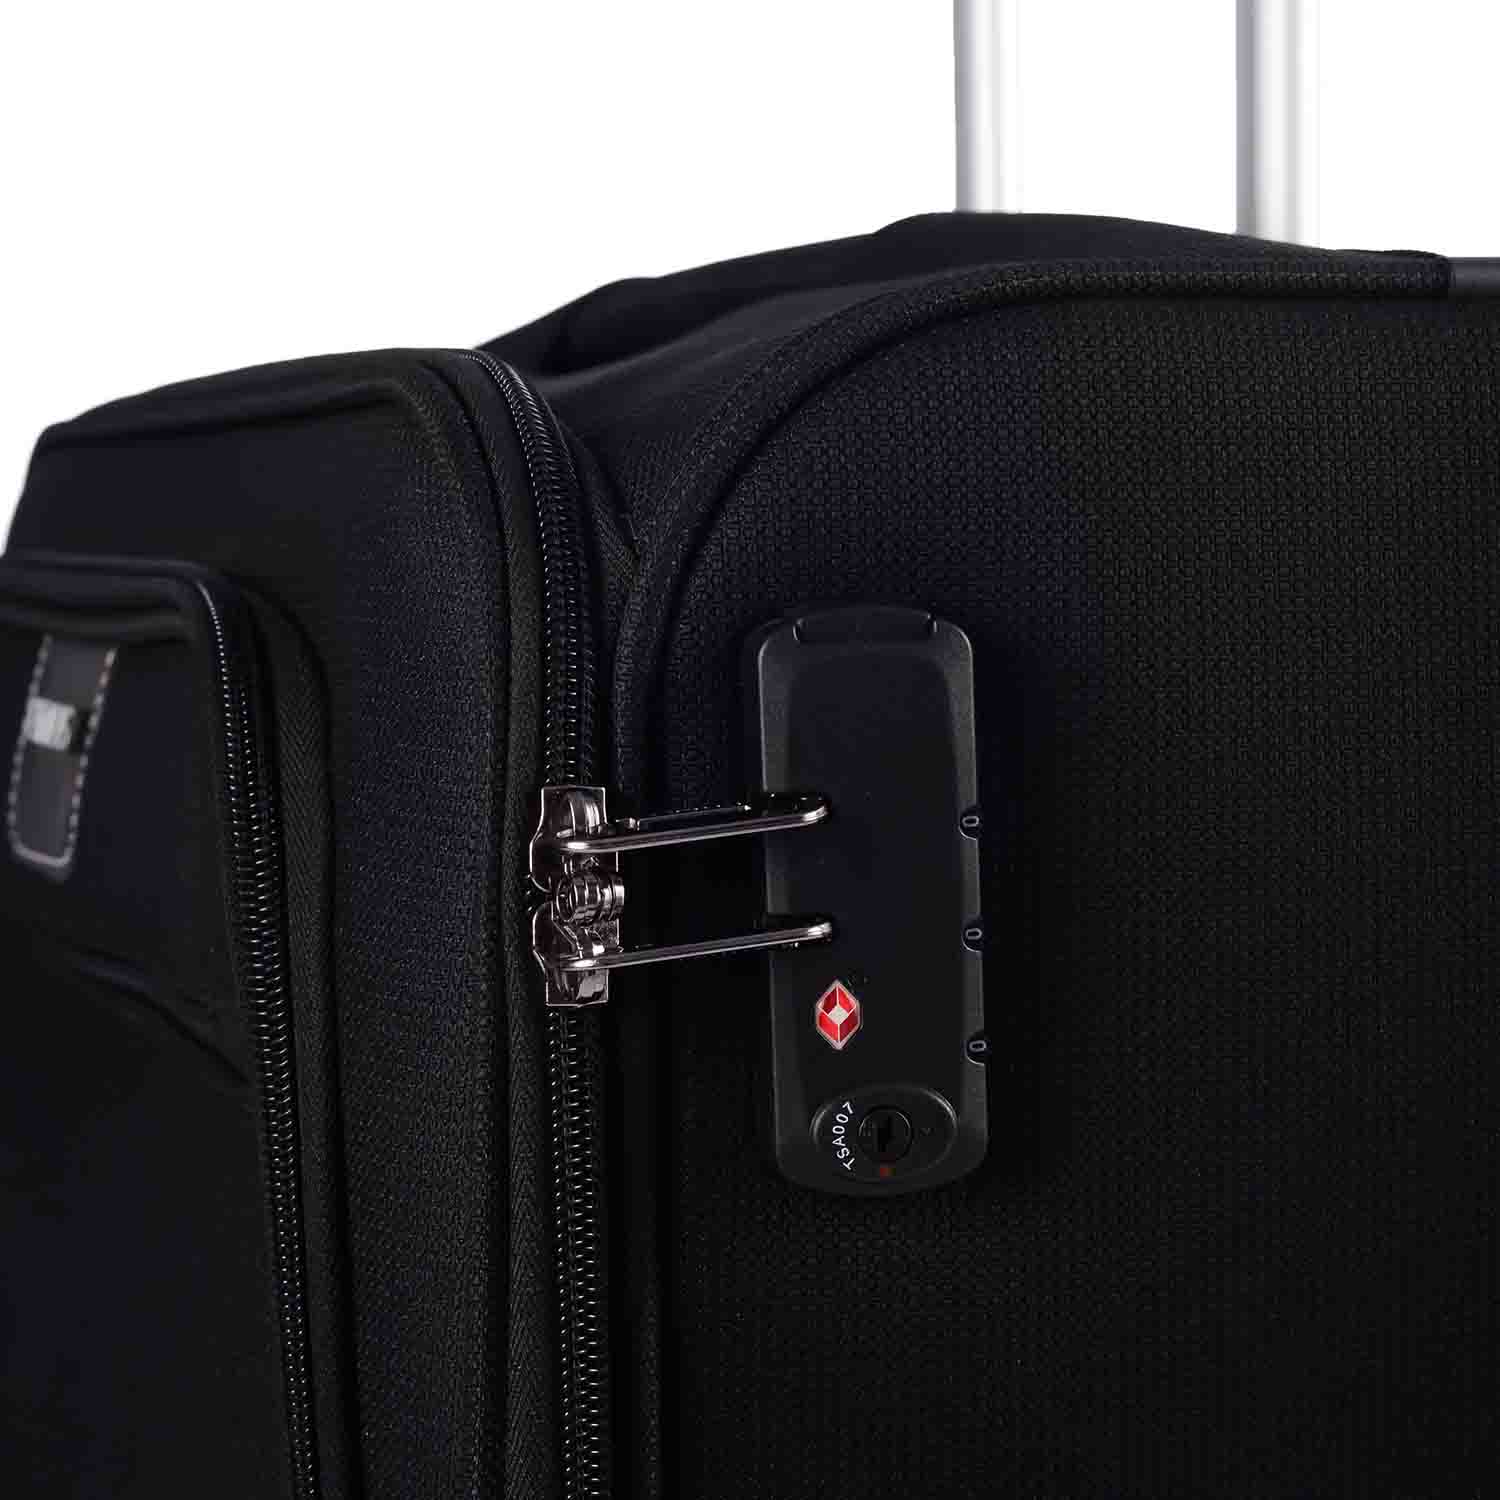 Timus-Lifestyle-Luggage-Soft-Luggage-Trolly-Bags-Atlanta-Pro-Black-5